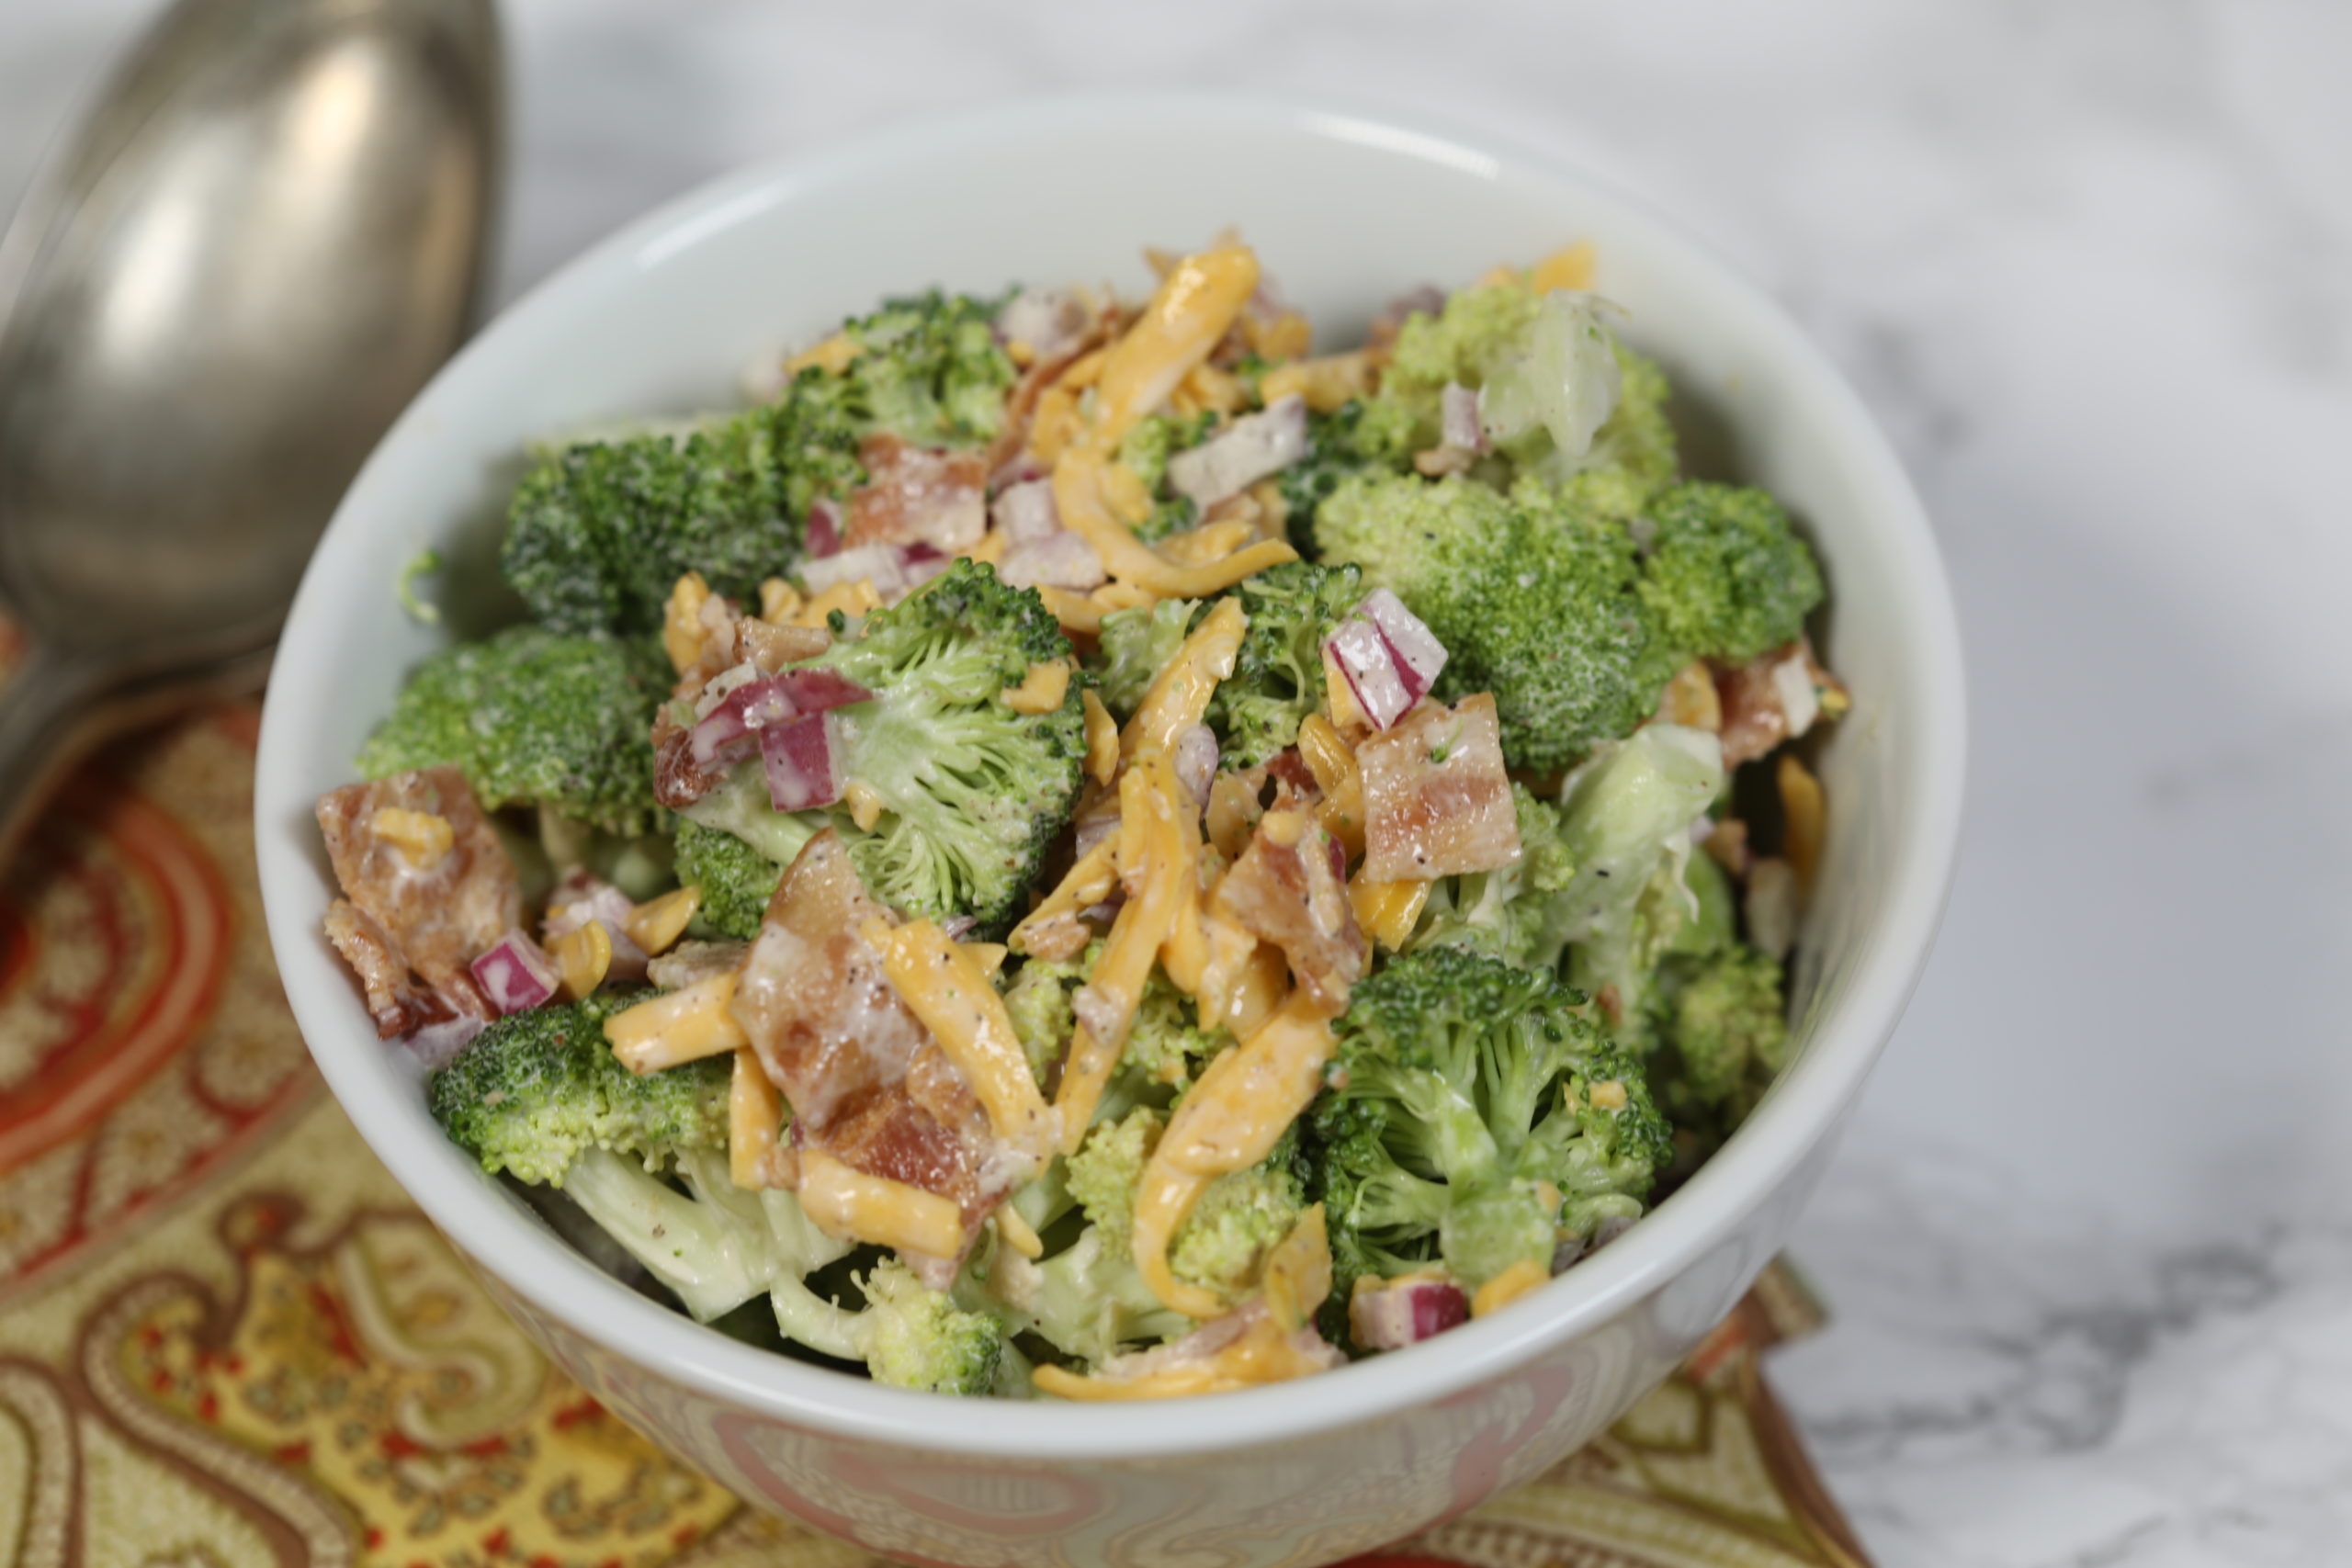 Broccoli bacon and cheese salad